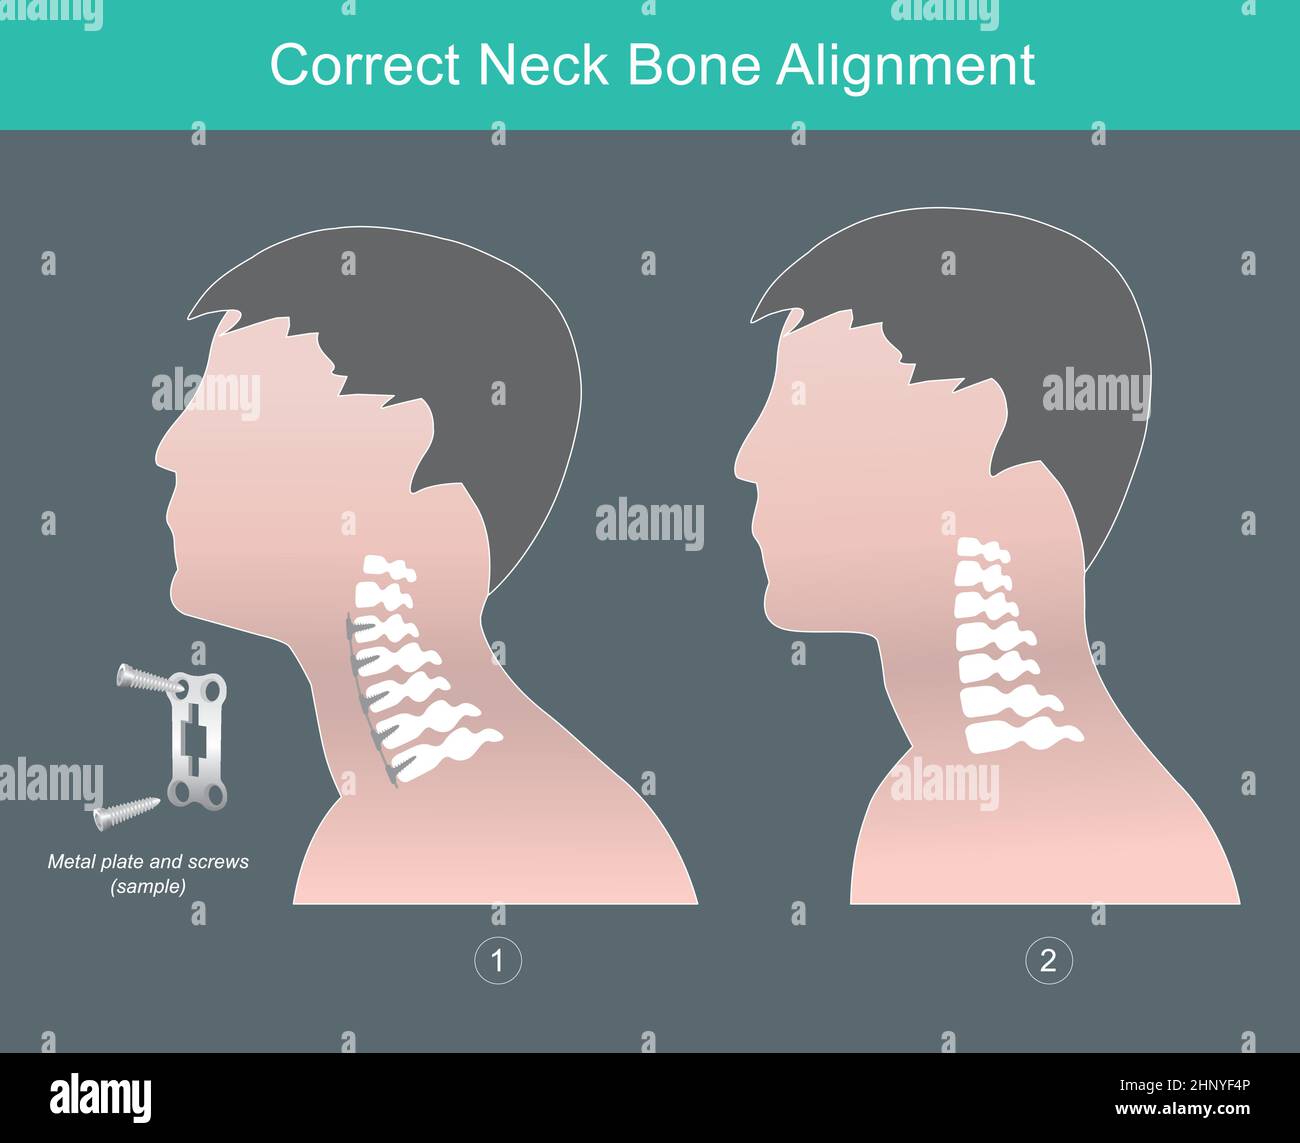 Correct Neck Bone Alignment. Showing human sideview the correct neck bone alignment. Stock Vector